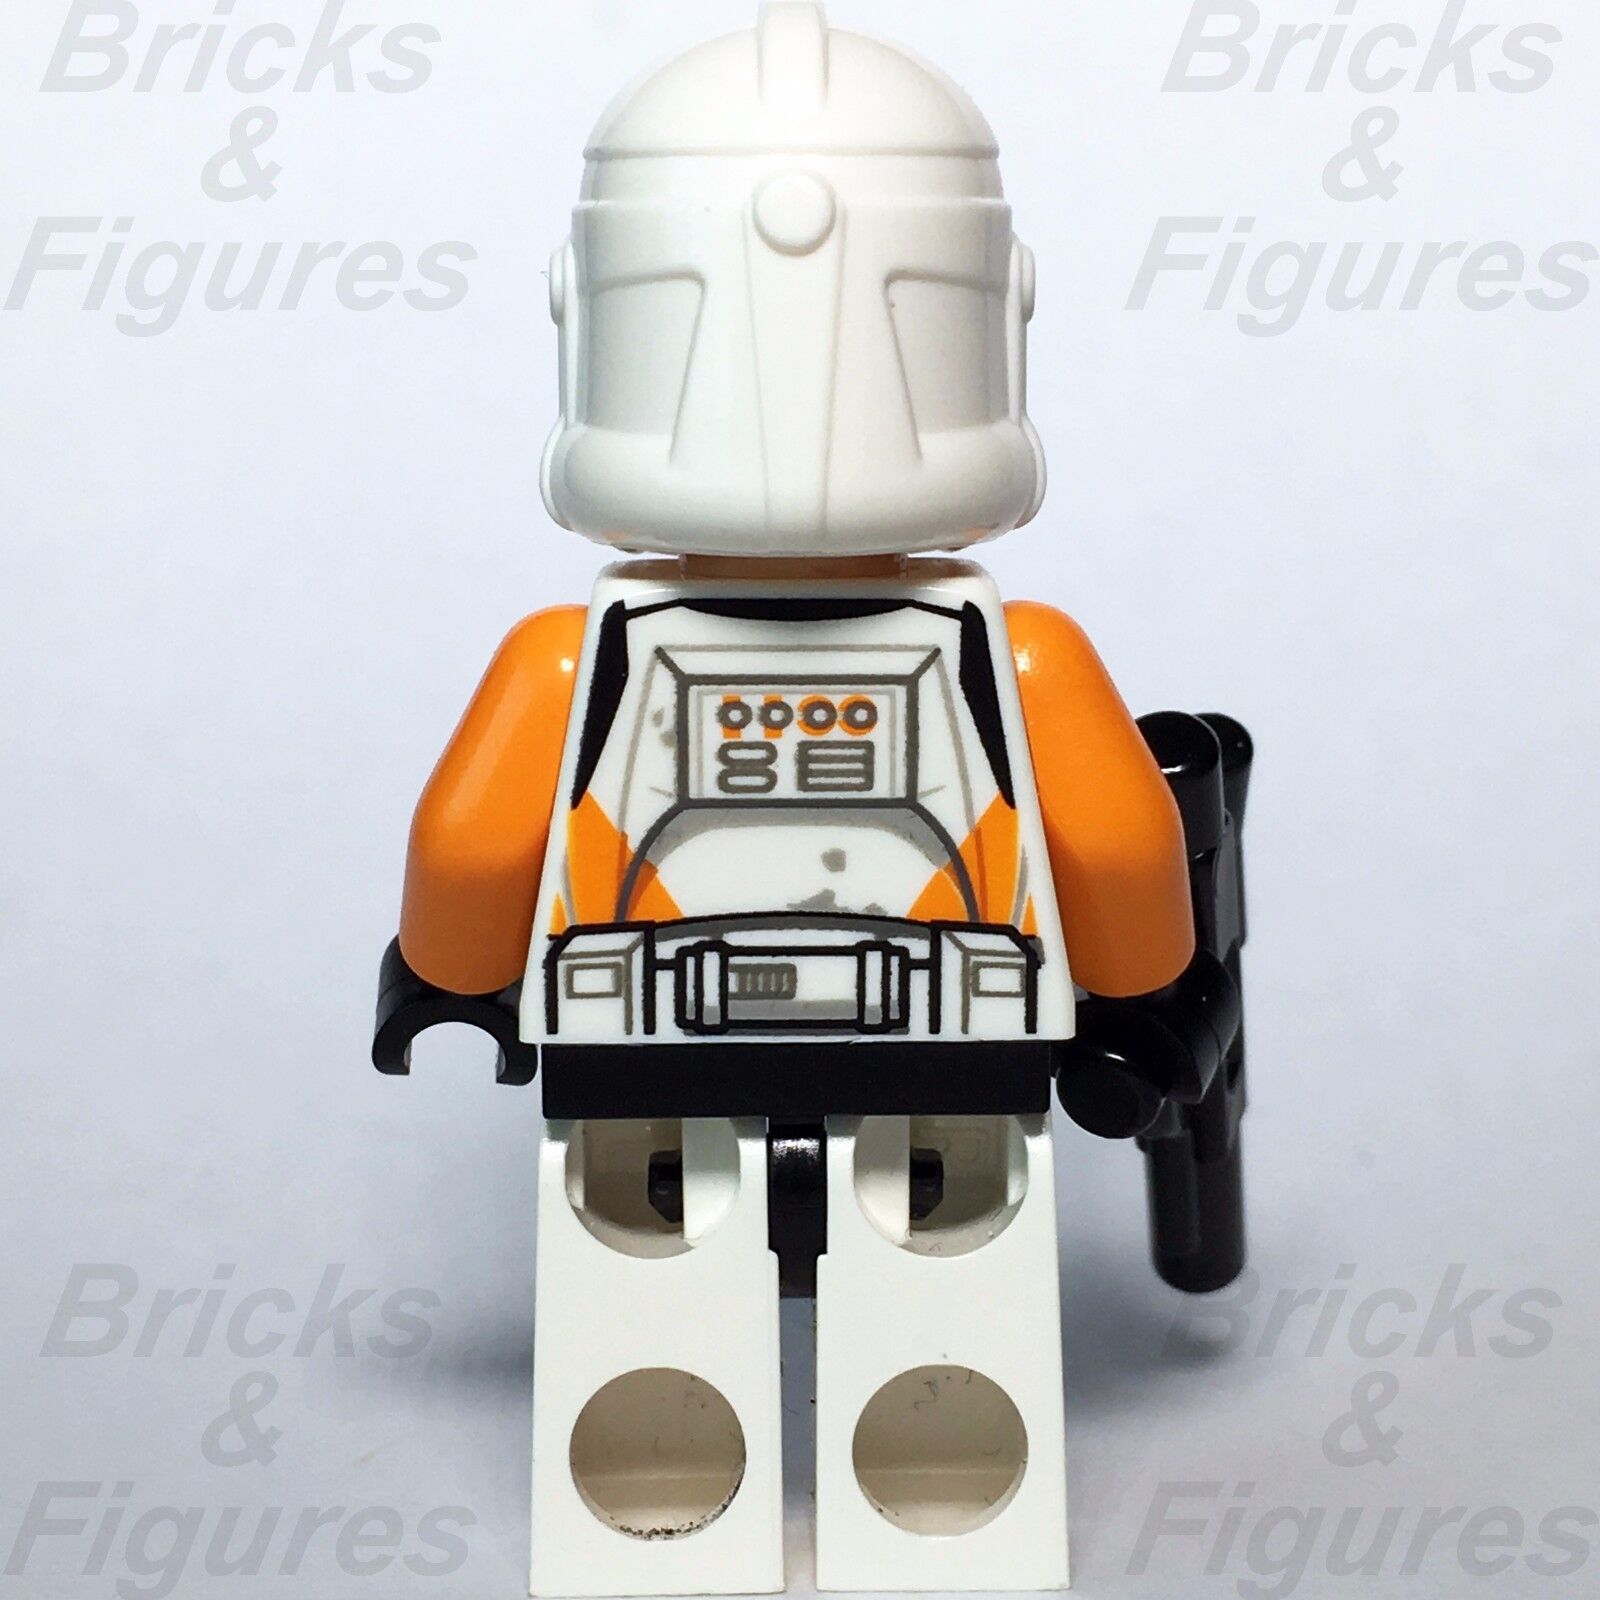 Star Wars LEGO 212th Battalion Utapau Clone Trooper Minifigure 75036 sw0522 New